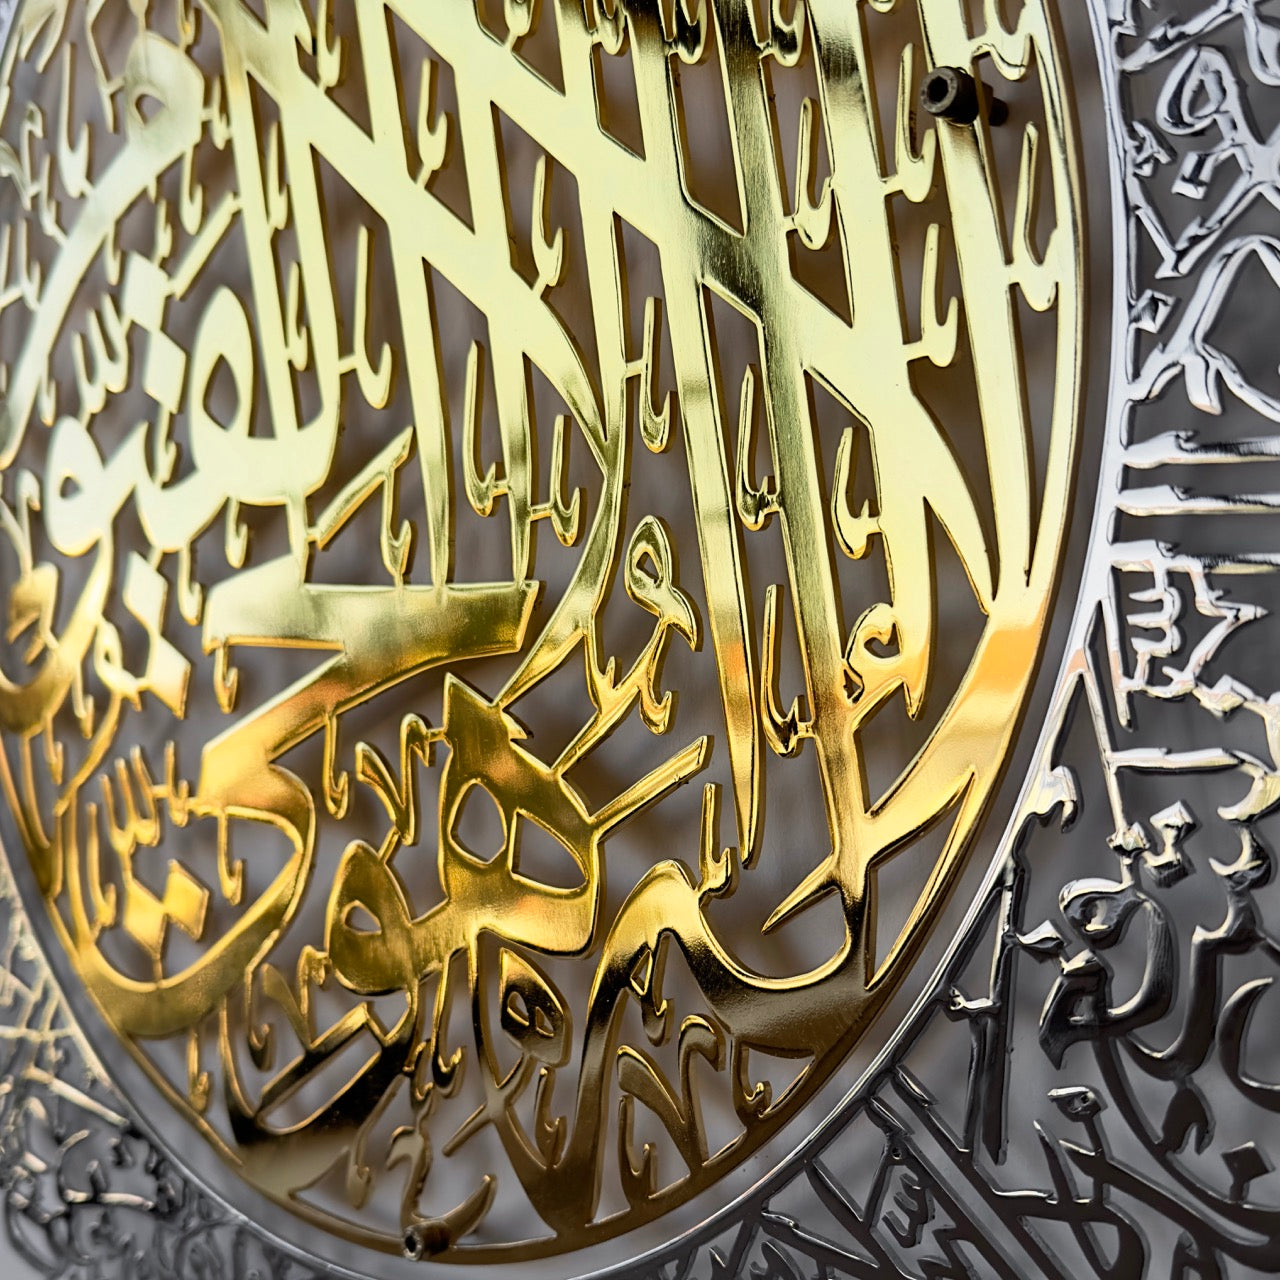 ayatul-kursi-thuluth-khatt-islamic-metal-wall-art-islamic-calligraphy-spiritual-artwork-for-walls-shukranislamicart